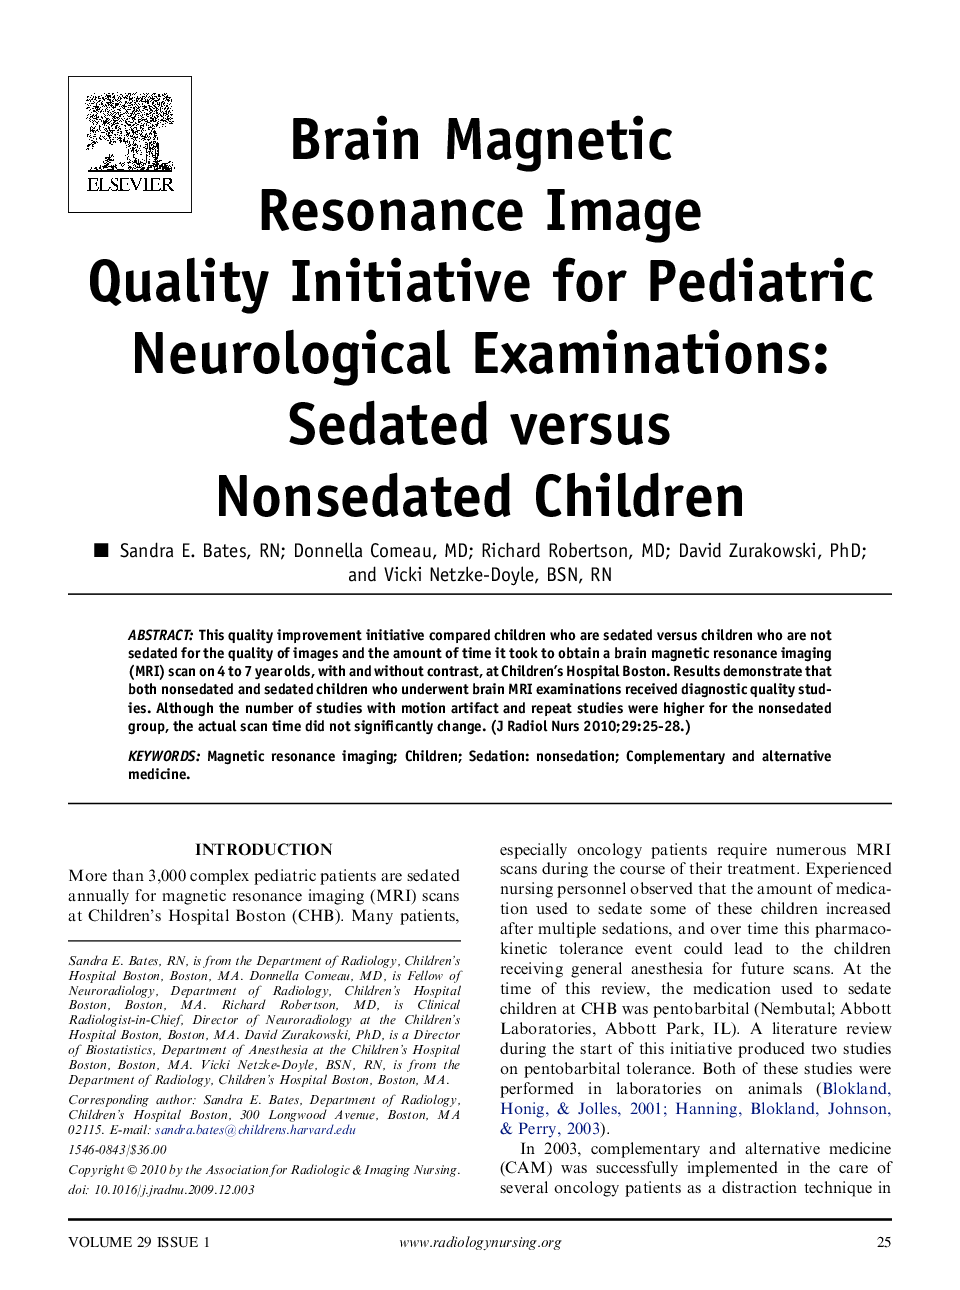 Brain Magnetic Resonance Image Quality Initiative for Pediatric Neurological Examinations: Sedated versus Nonsedated Children